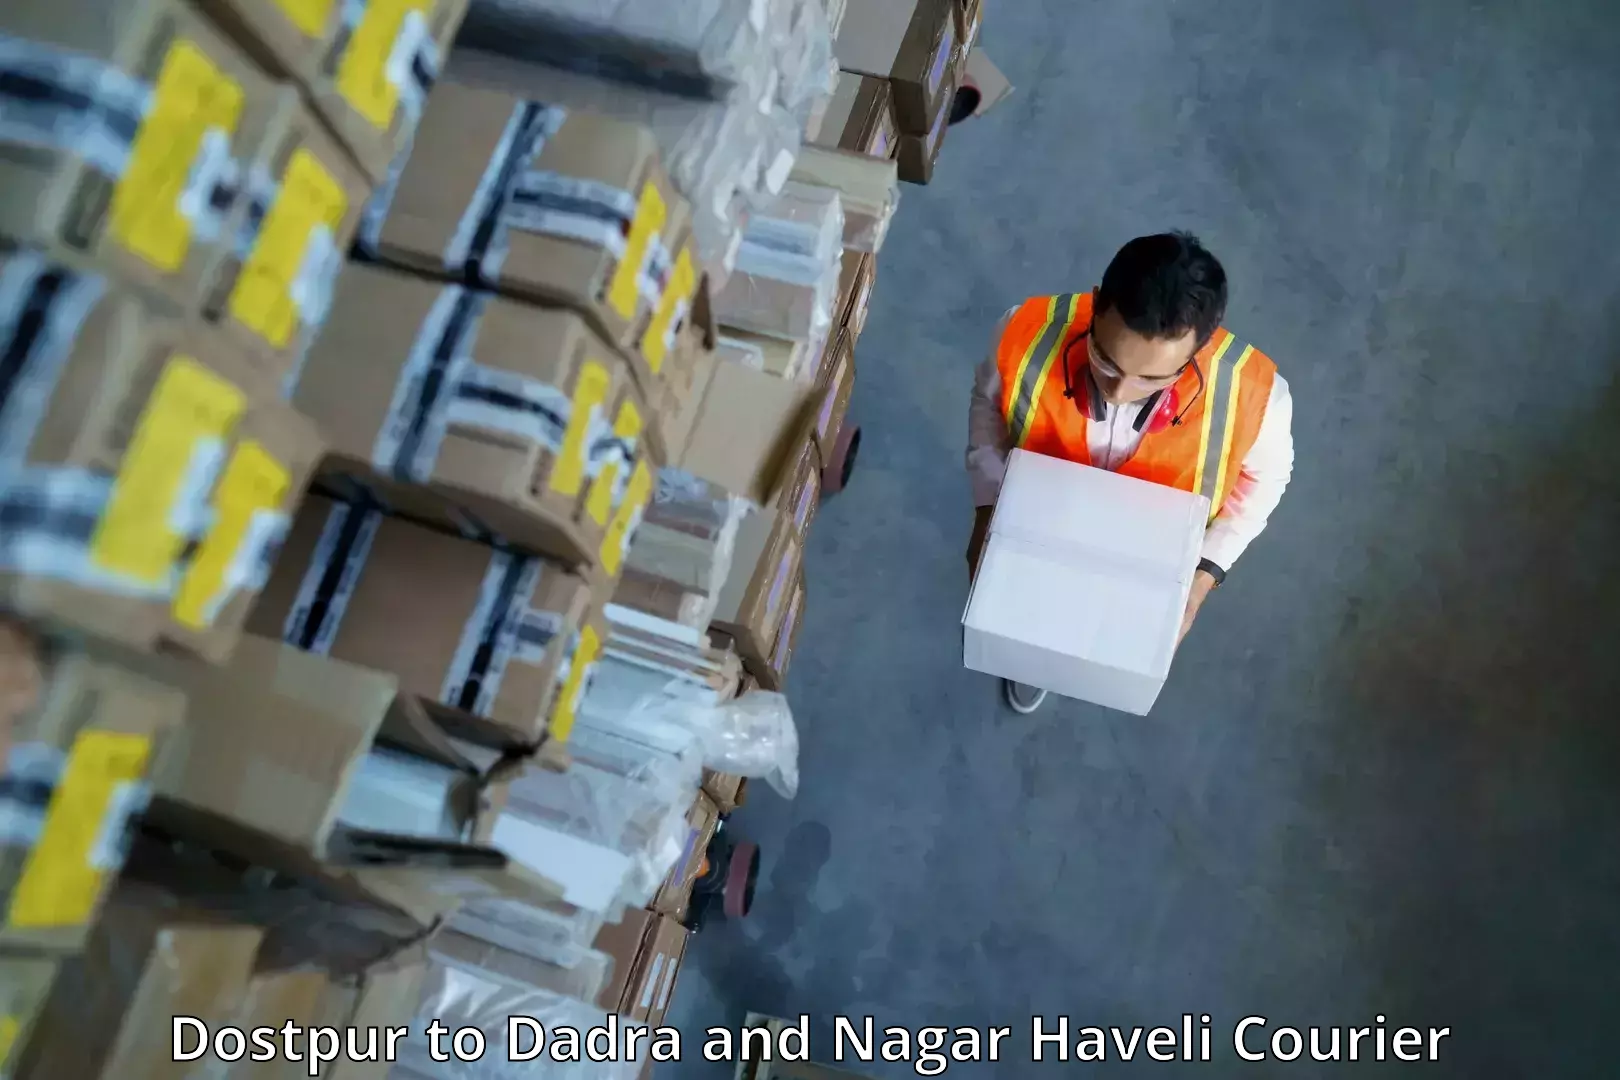 Express logistics service Dostpur to Dadra and Nagar Haveli